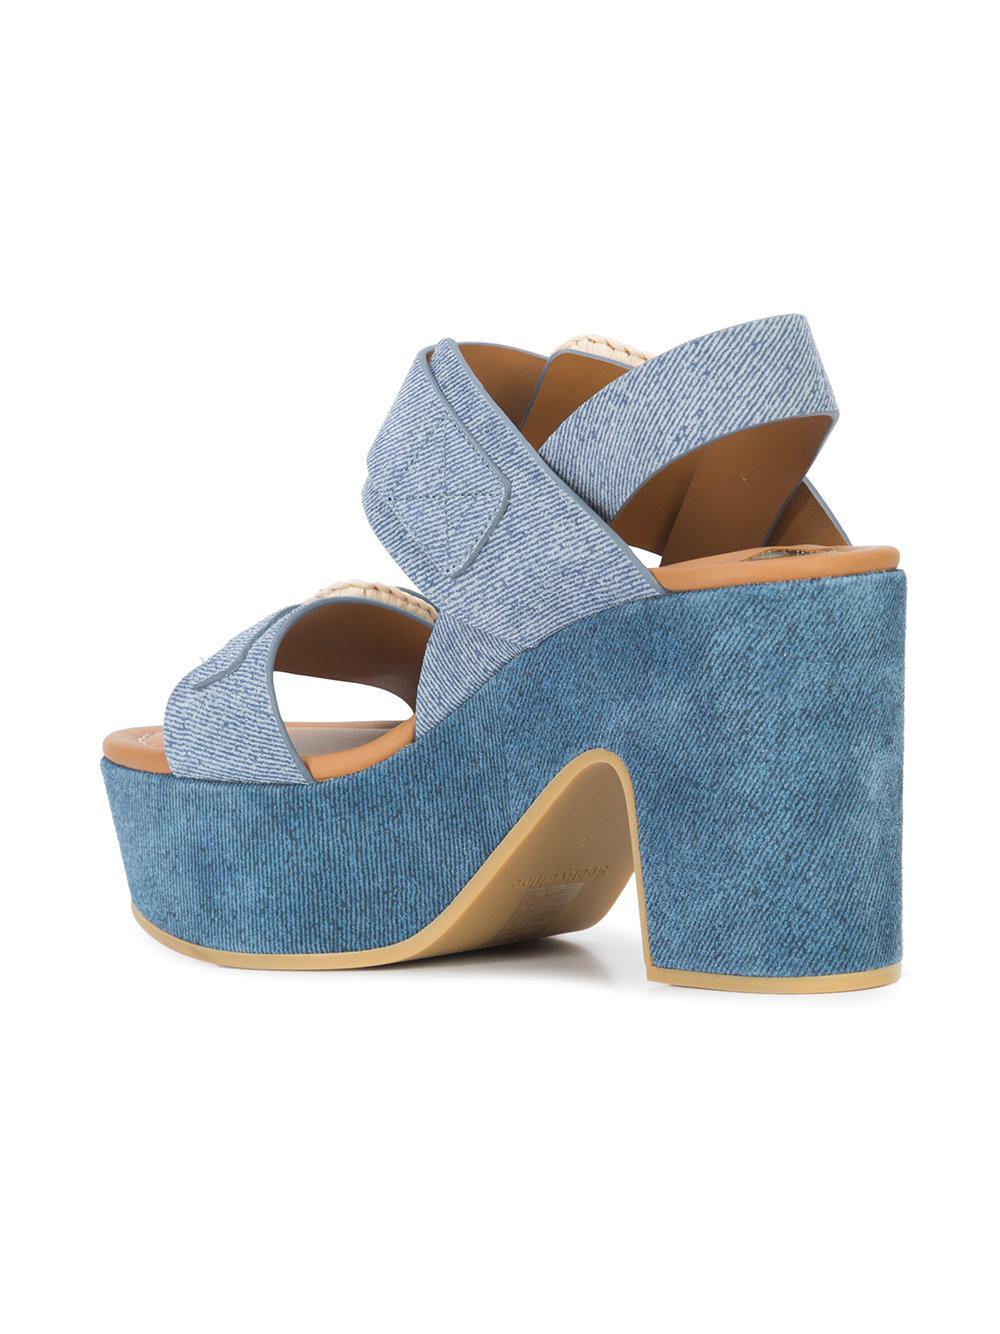 See By Chloé Denim Nora Platform Sandals in Blue - Lyst